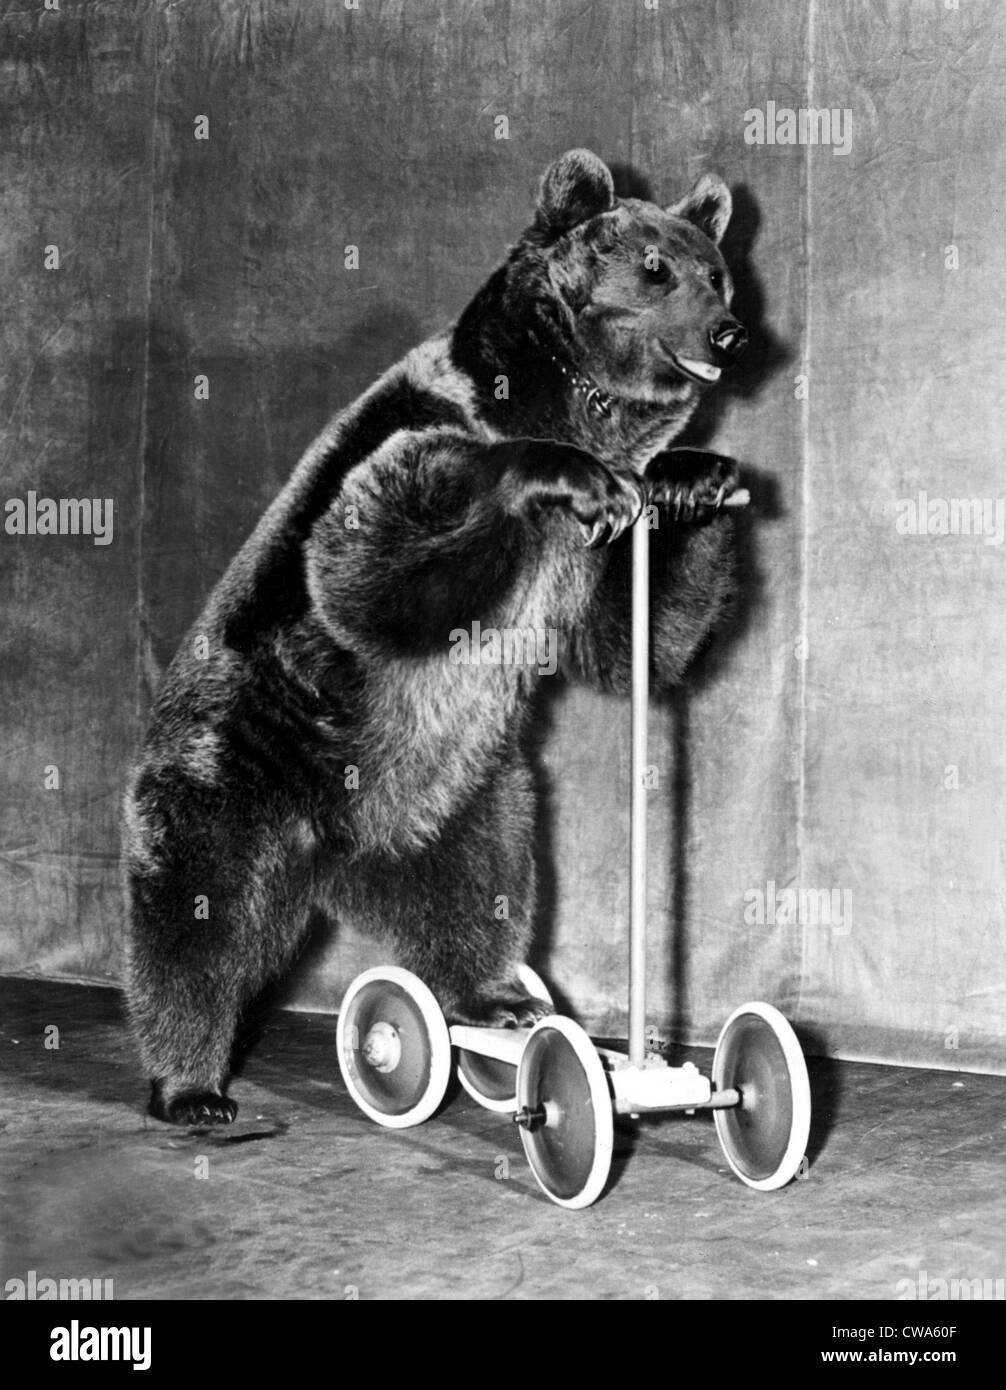 Zirkus Bär ab 1942... Höflichkeit: CSU Archive / Everett Collection Stockfoto